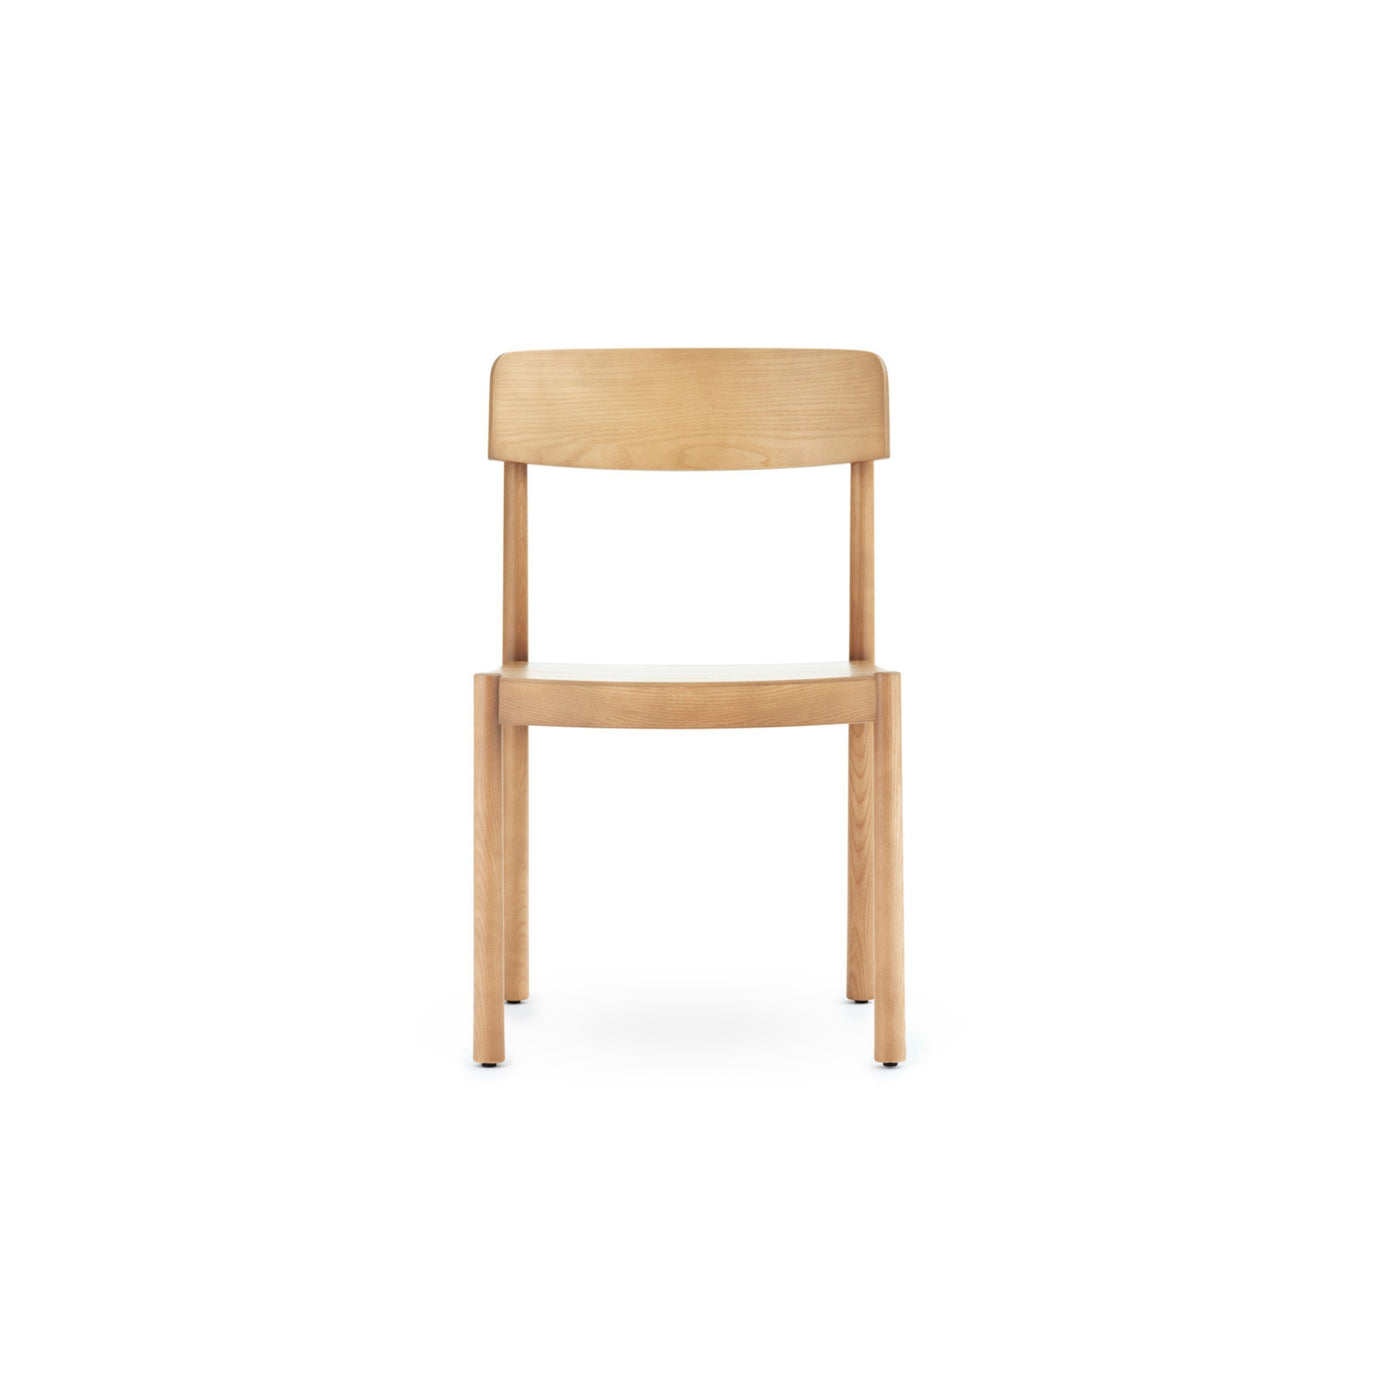 Normann Copenhagen Timb Chair at someday designs. #colour_tan